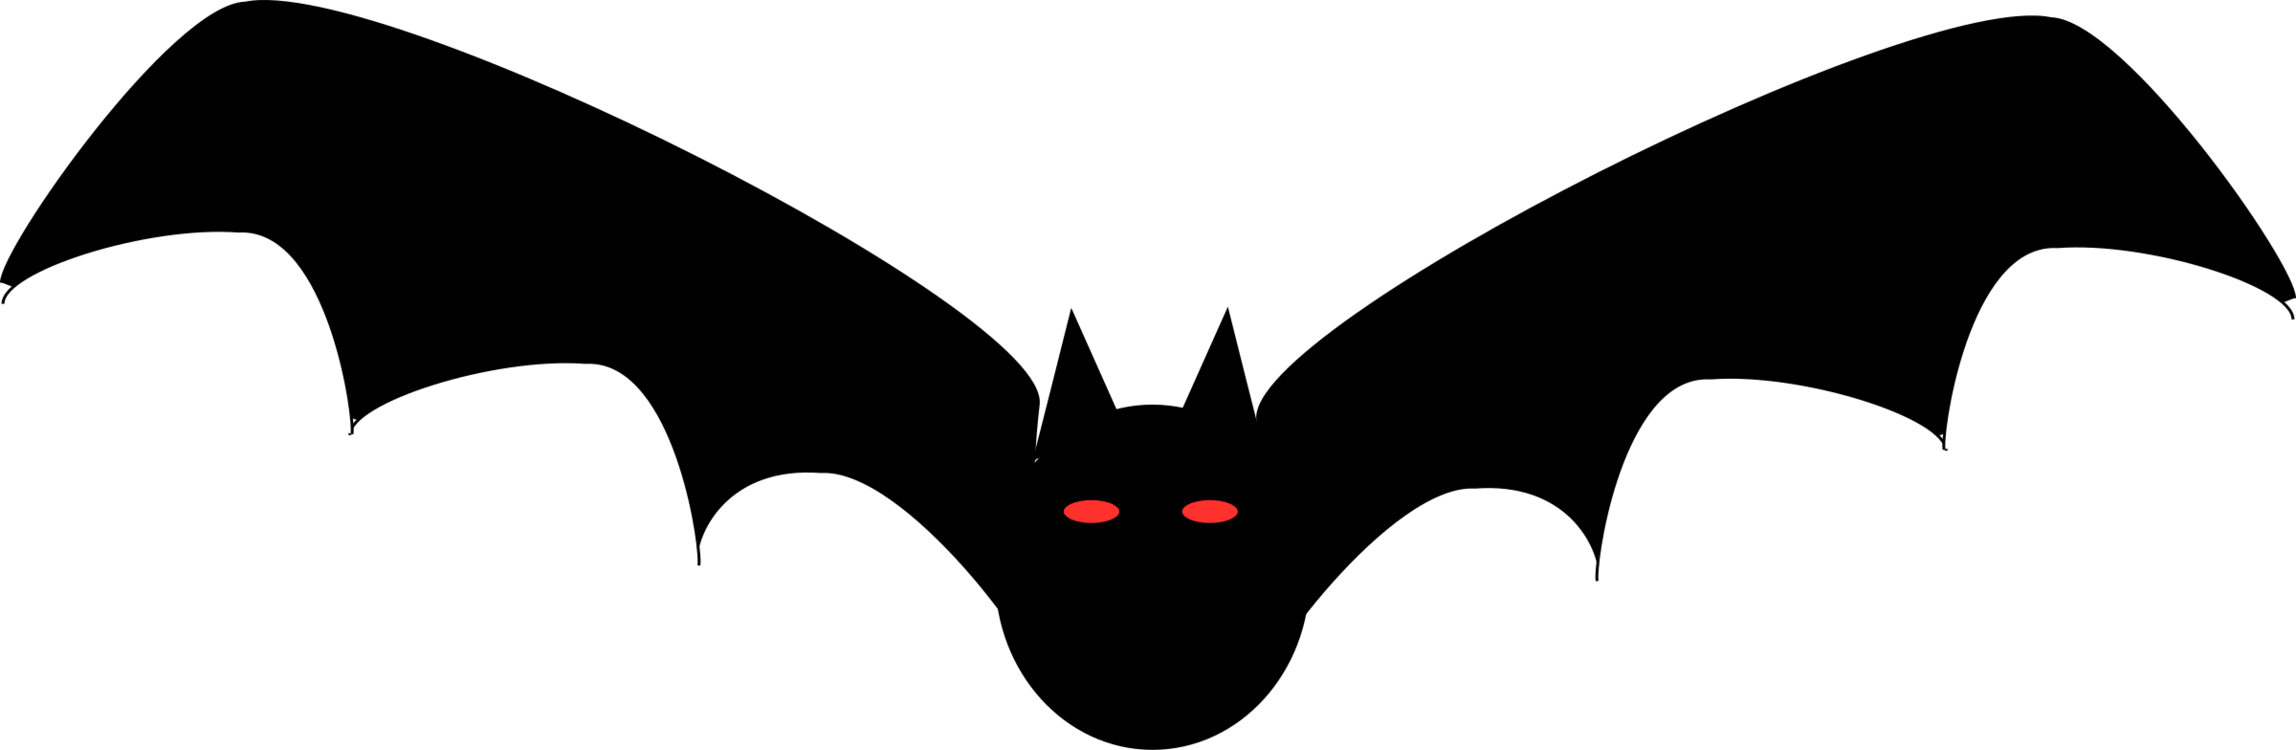 Halloween Bat schwarz transparent